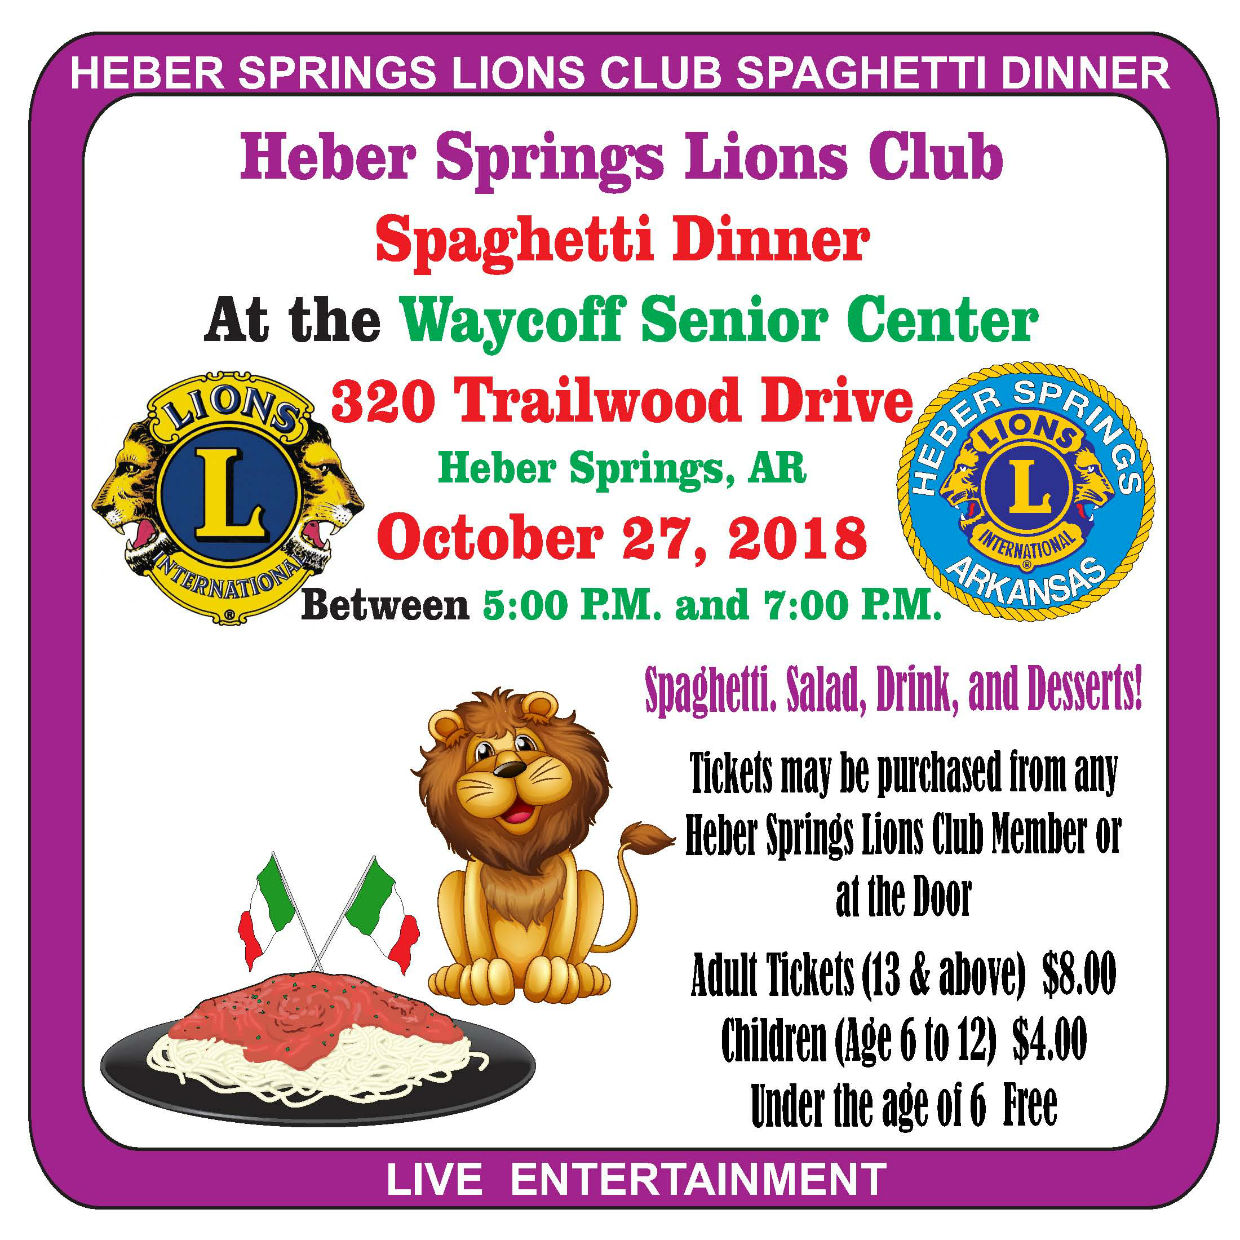 Heber Springs Lions Club Spaghetti Dinner